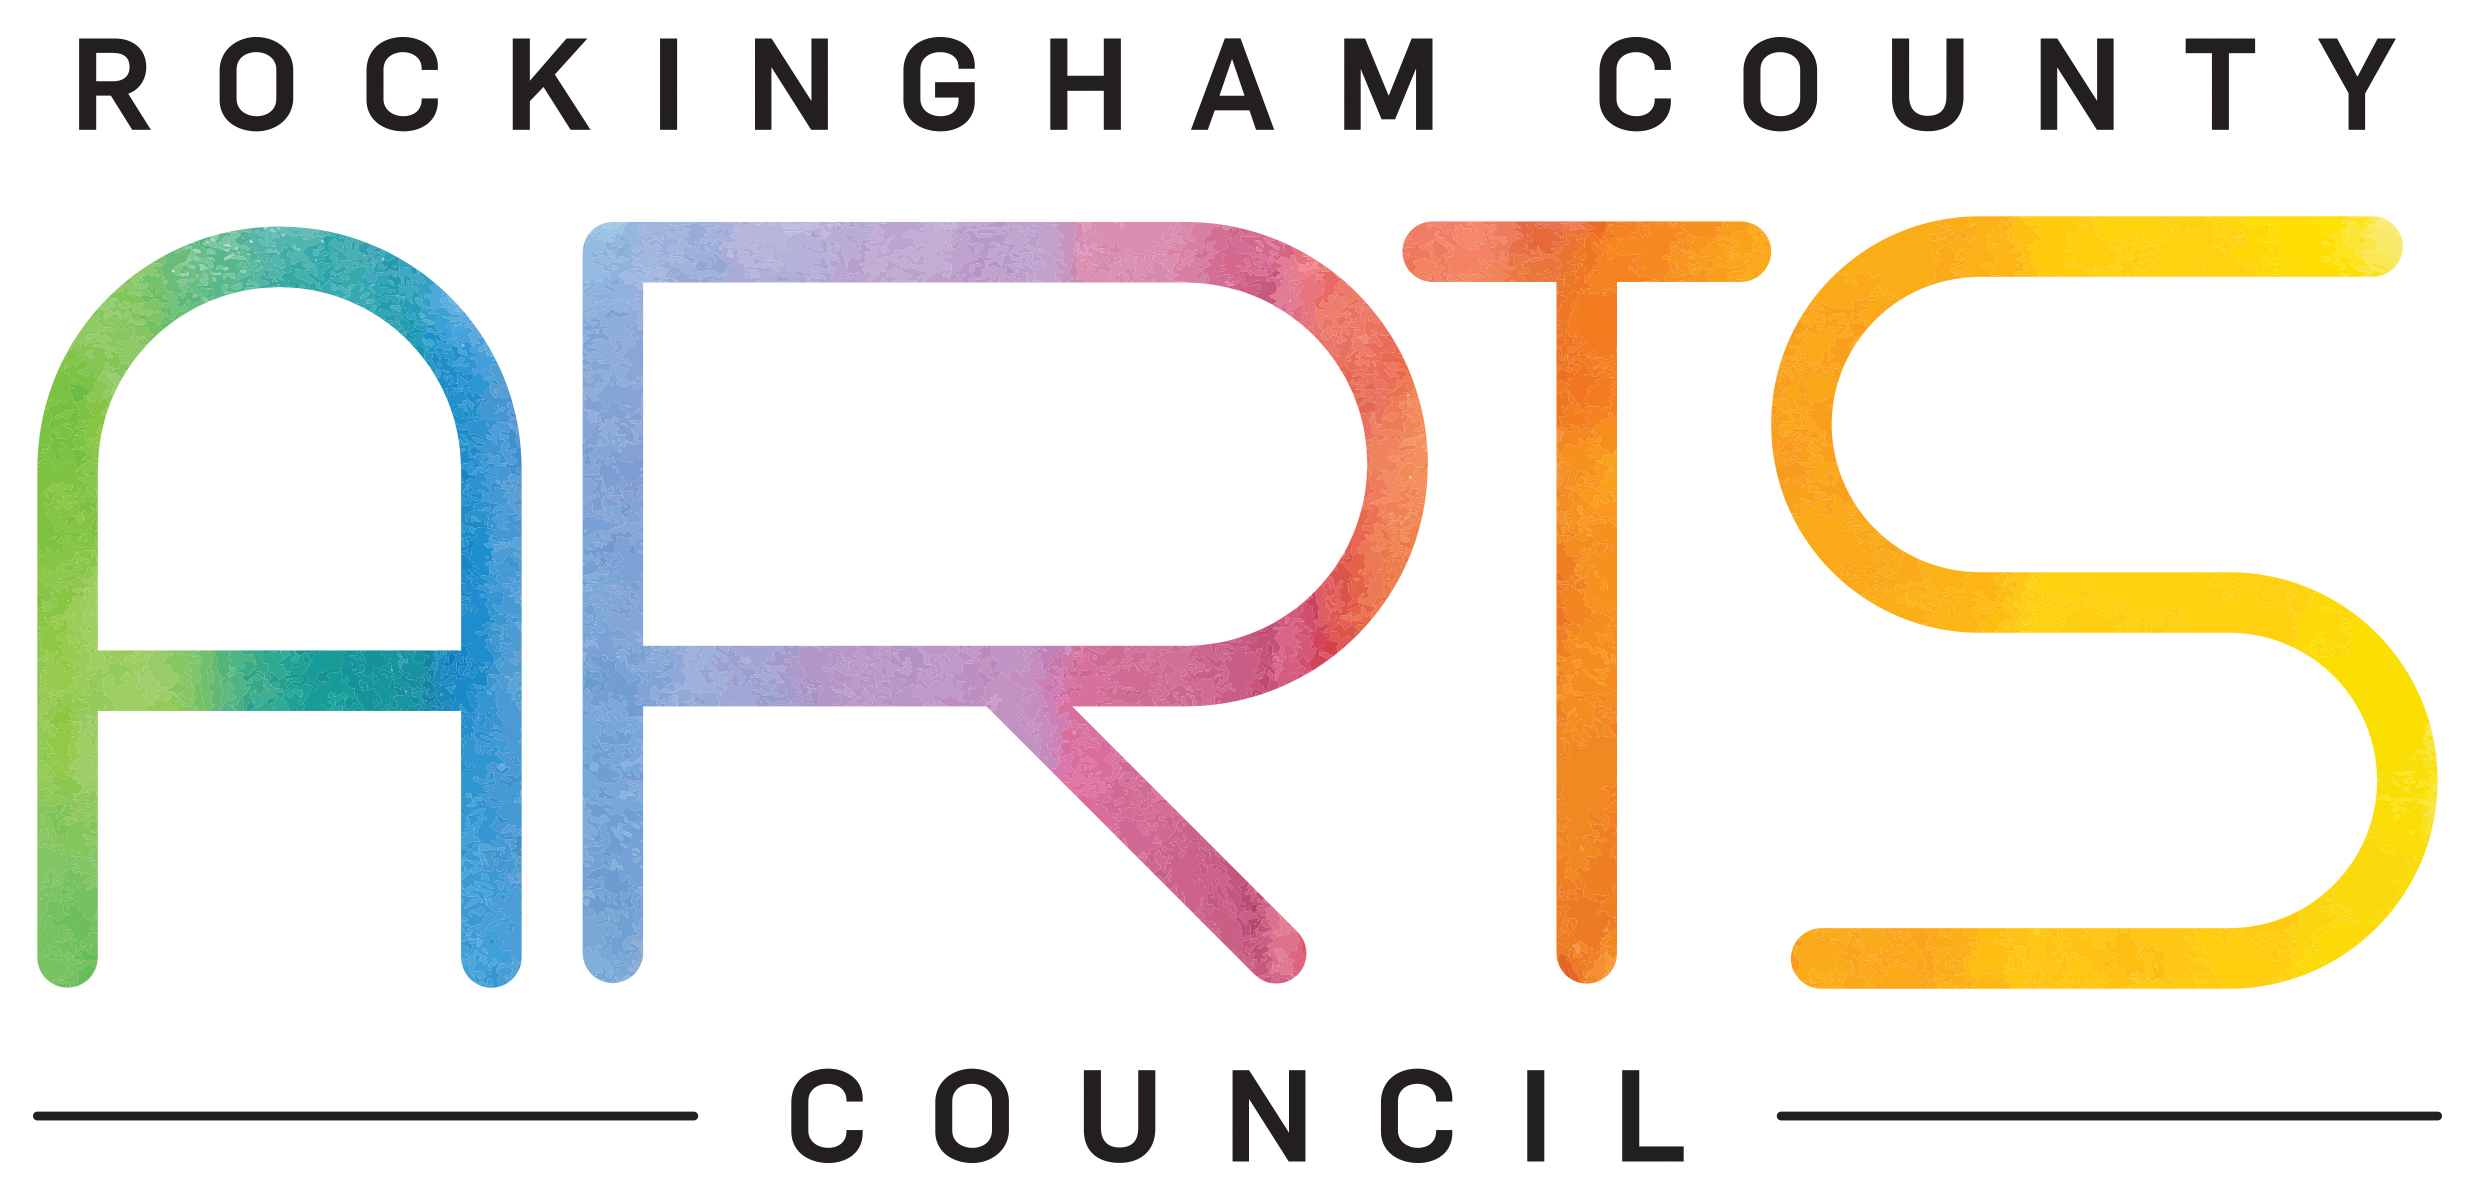 Rockingham County Arts Council logo